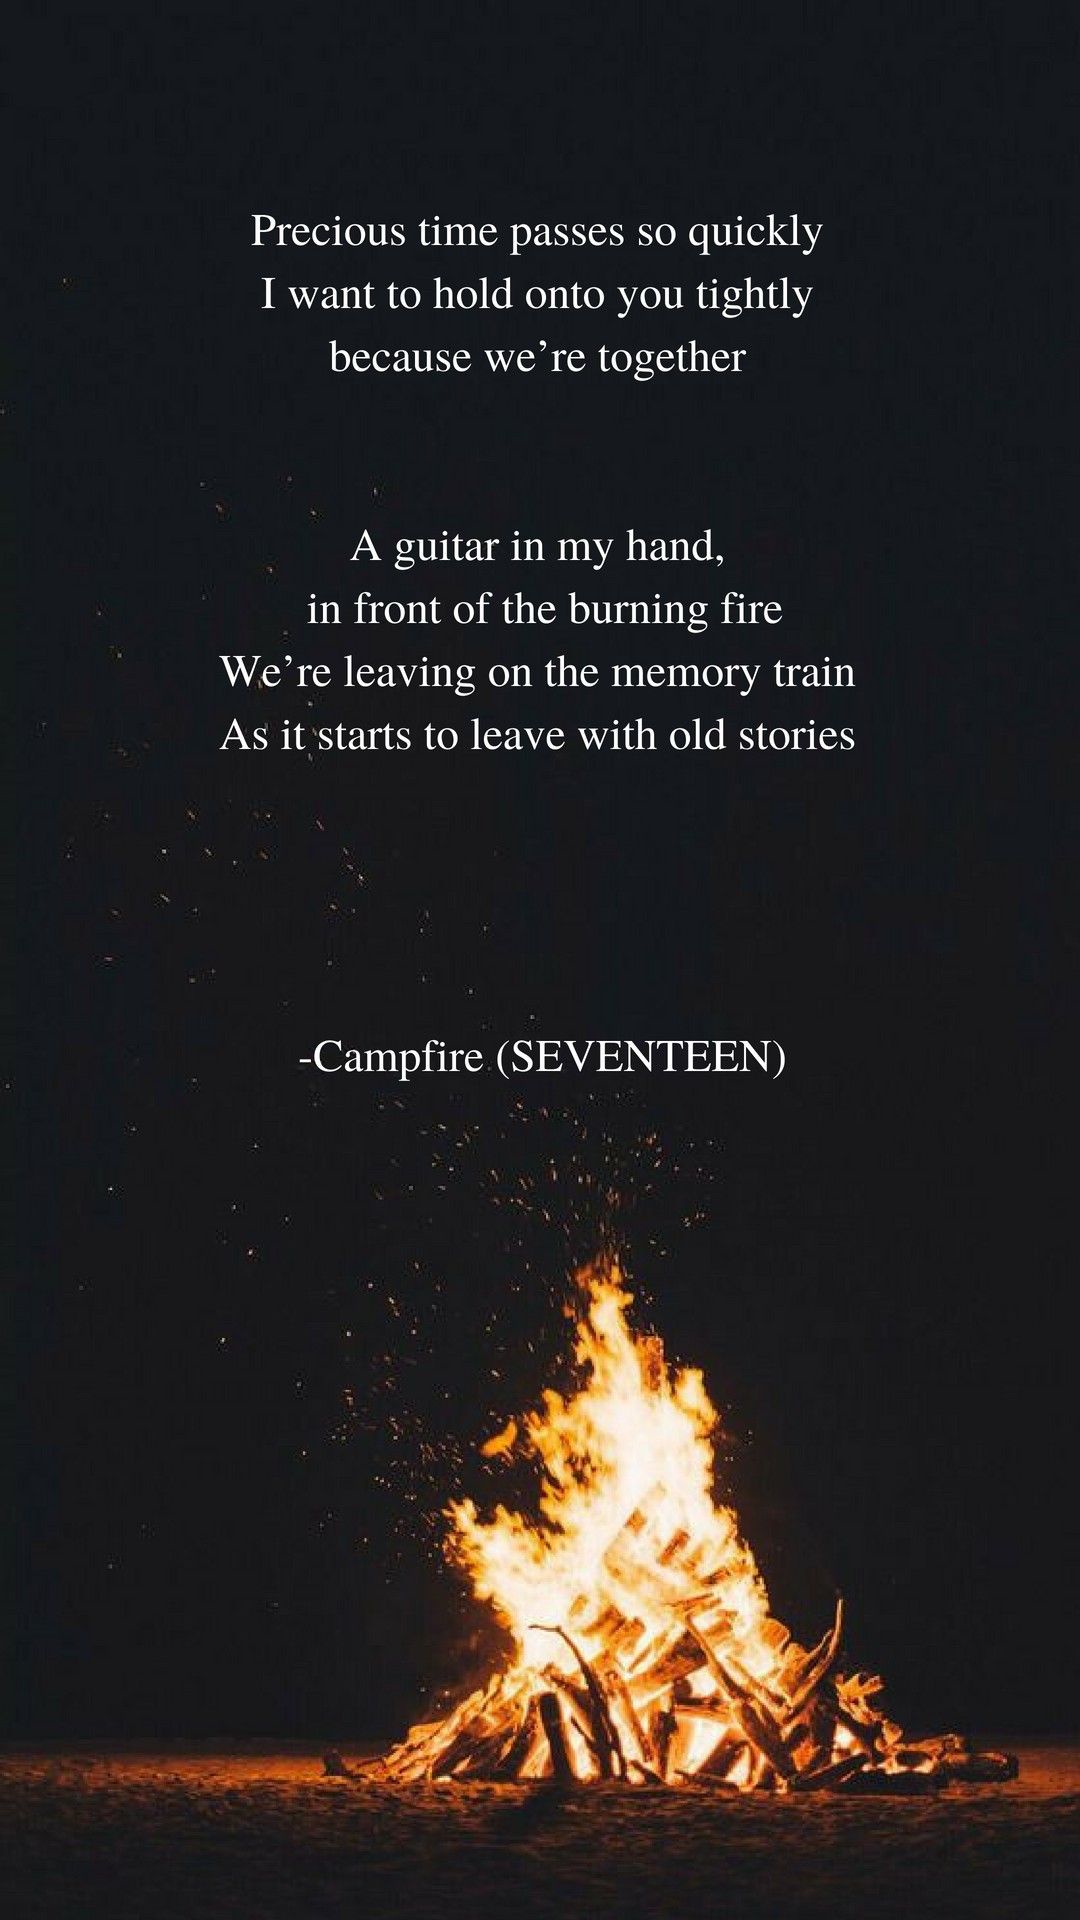 Campfire By Seventeen Lyrics Wallpaper Kutipan Lirik Lagu